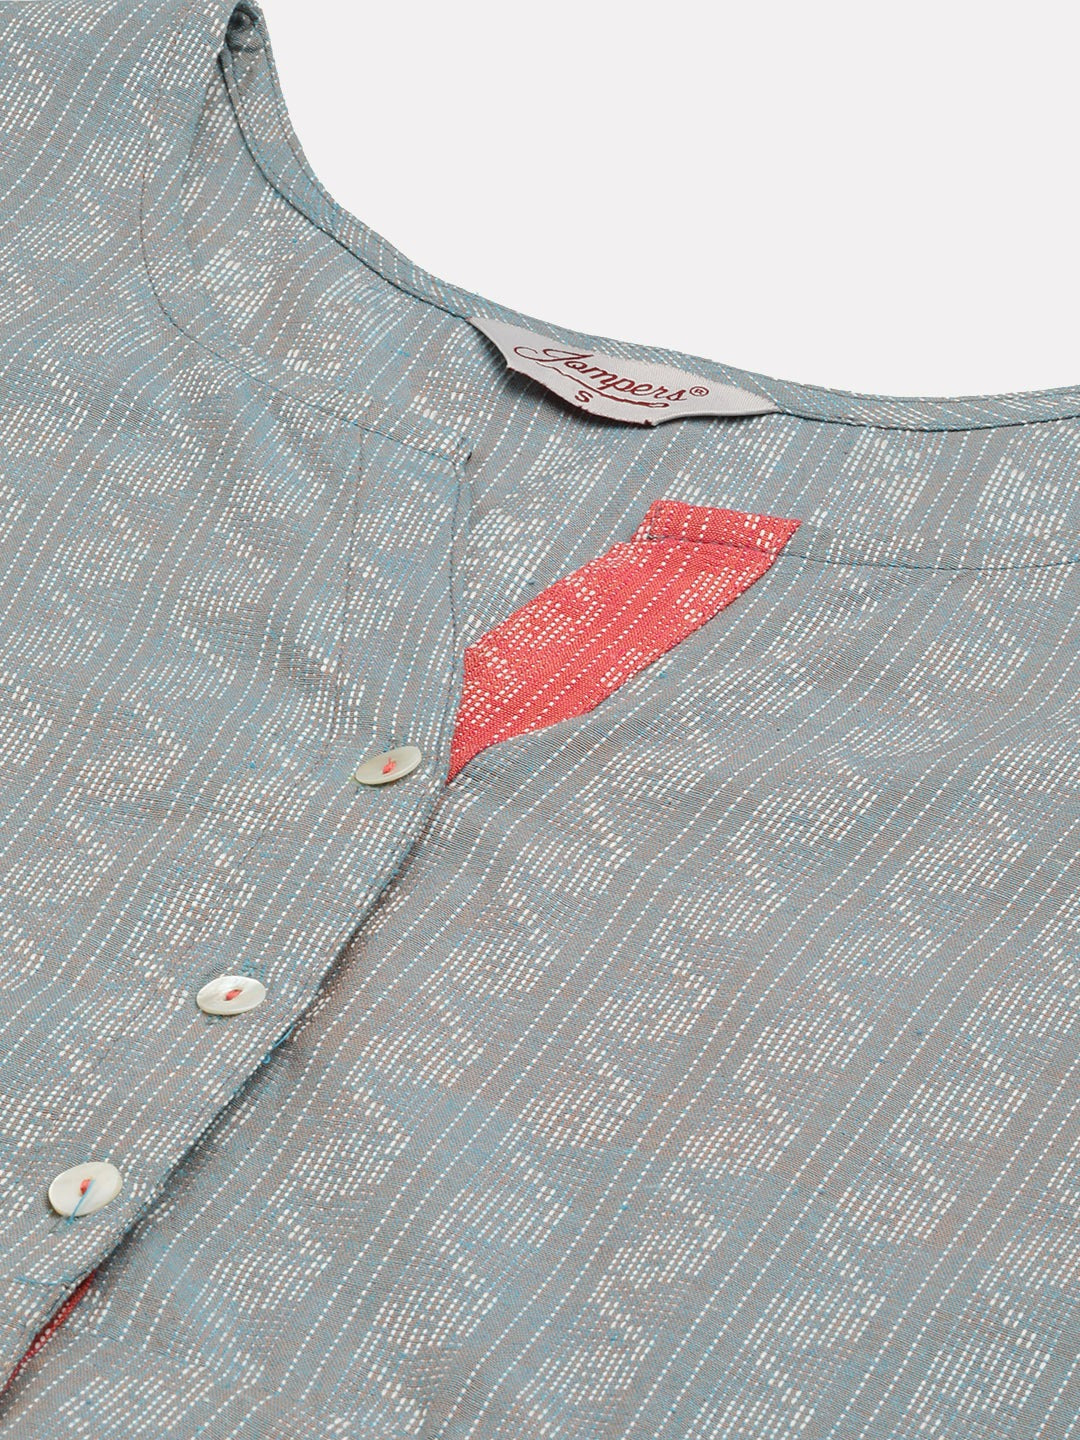 Women's Grey & Red Cotton Jacquard Geometric Printed Kurta ( JOK 1430 Grey ) - Jompers